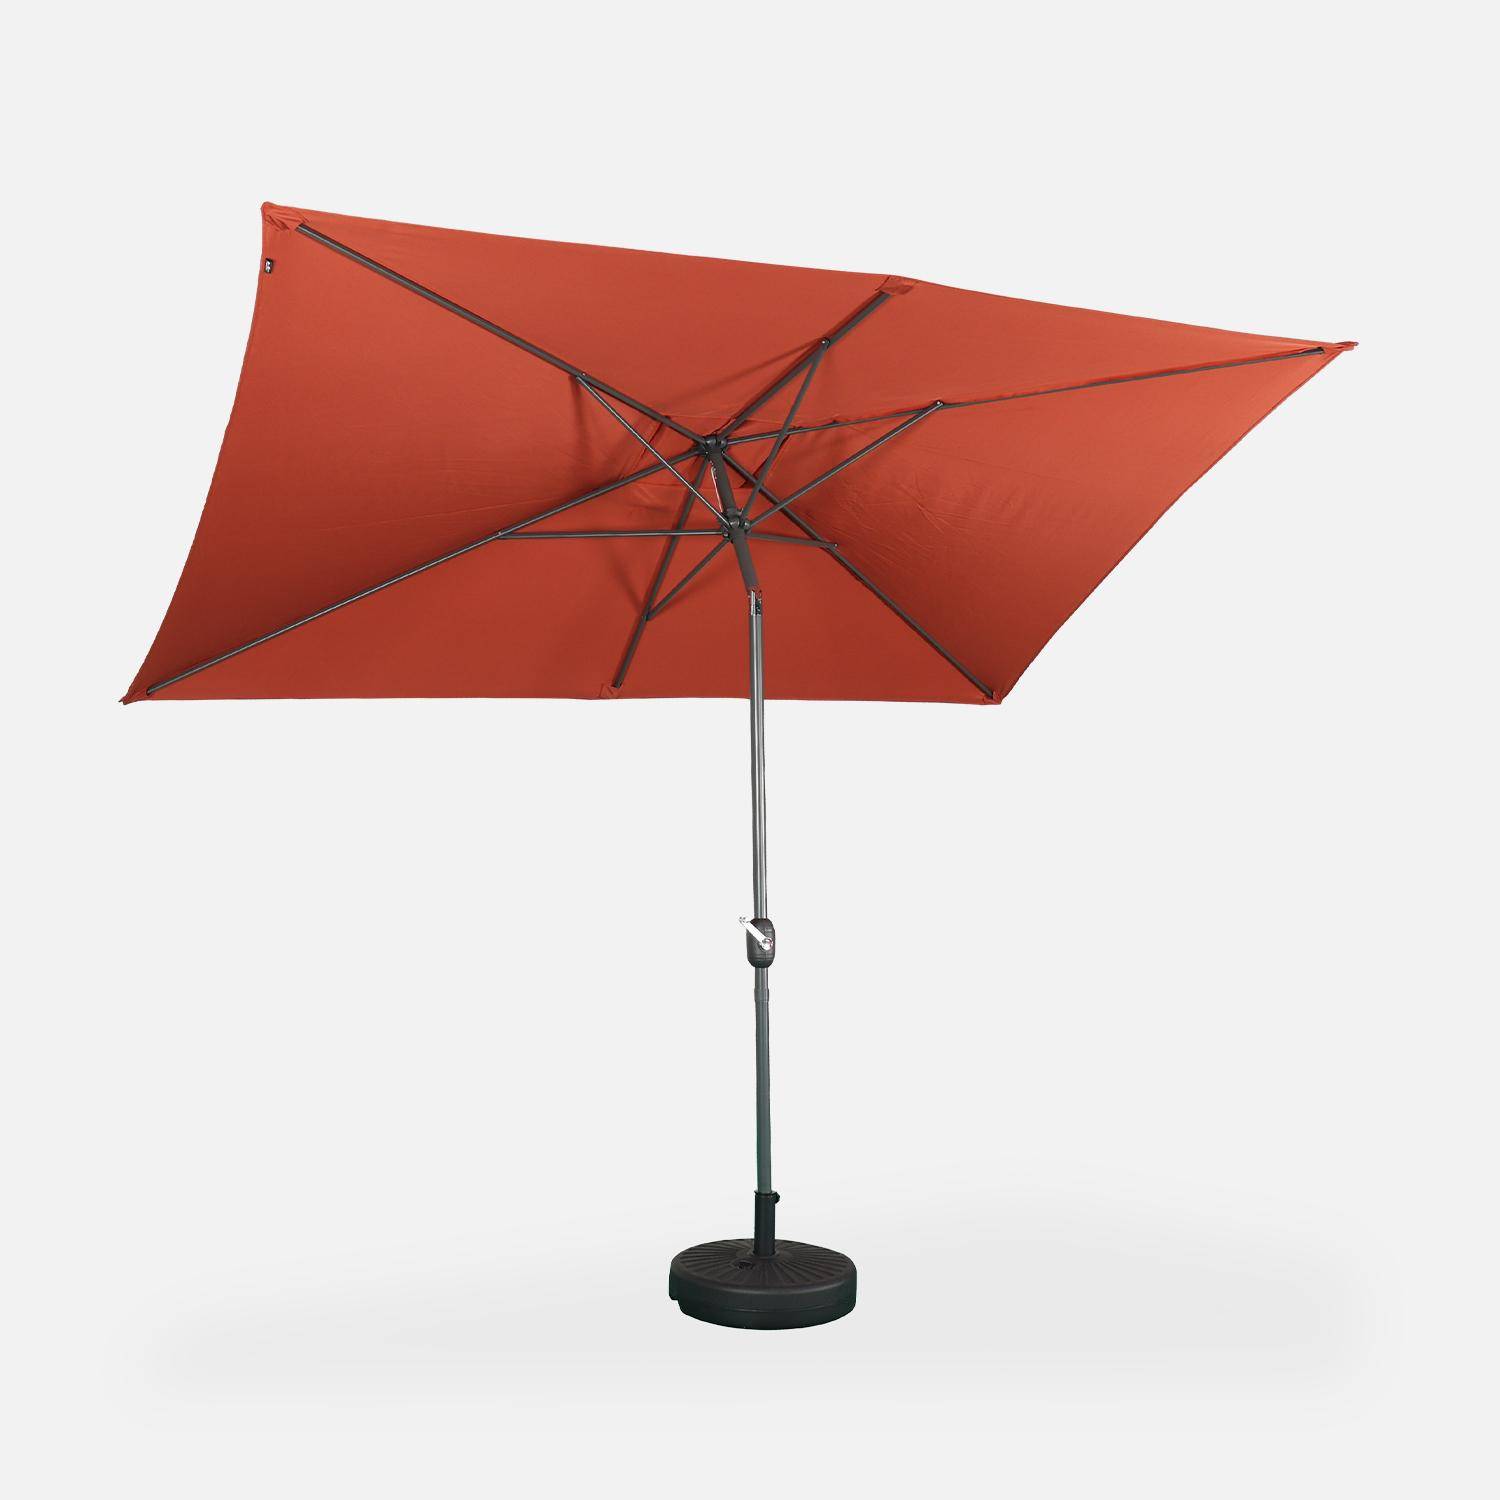 Sombrilla jardin, parasol rojo, mástil central, inclinable, rectangular, 2x3m, Touquet,sweeek,Photo3